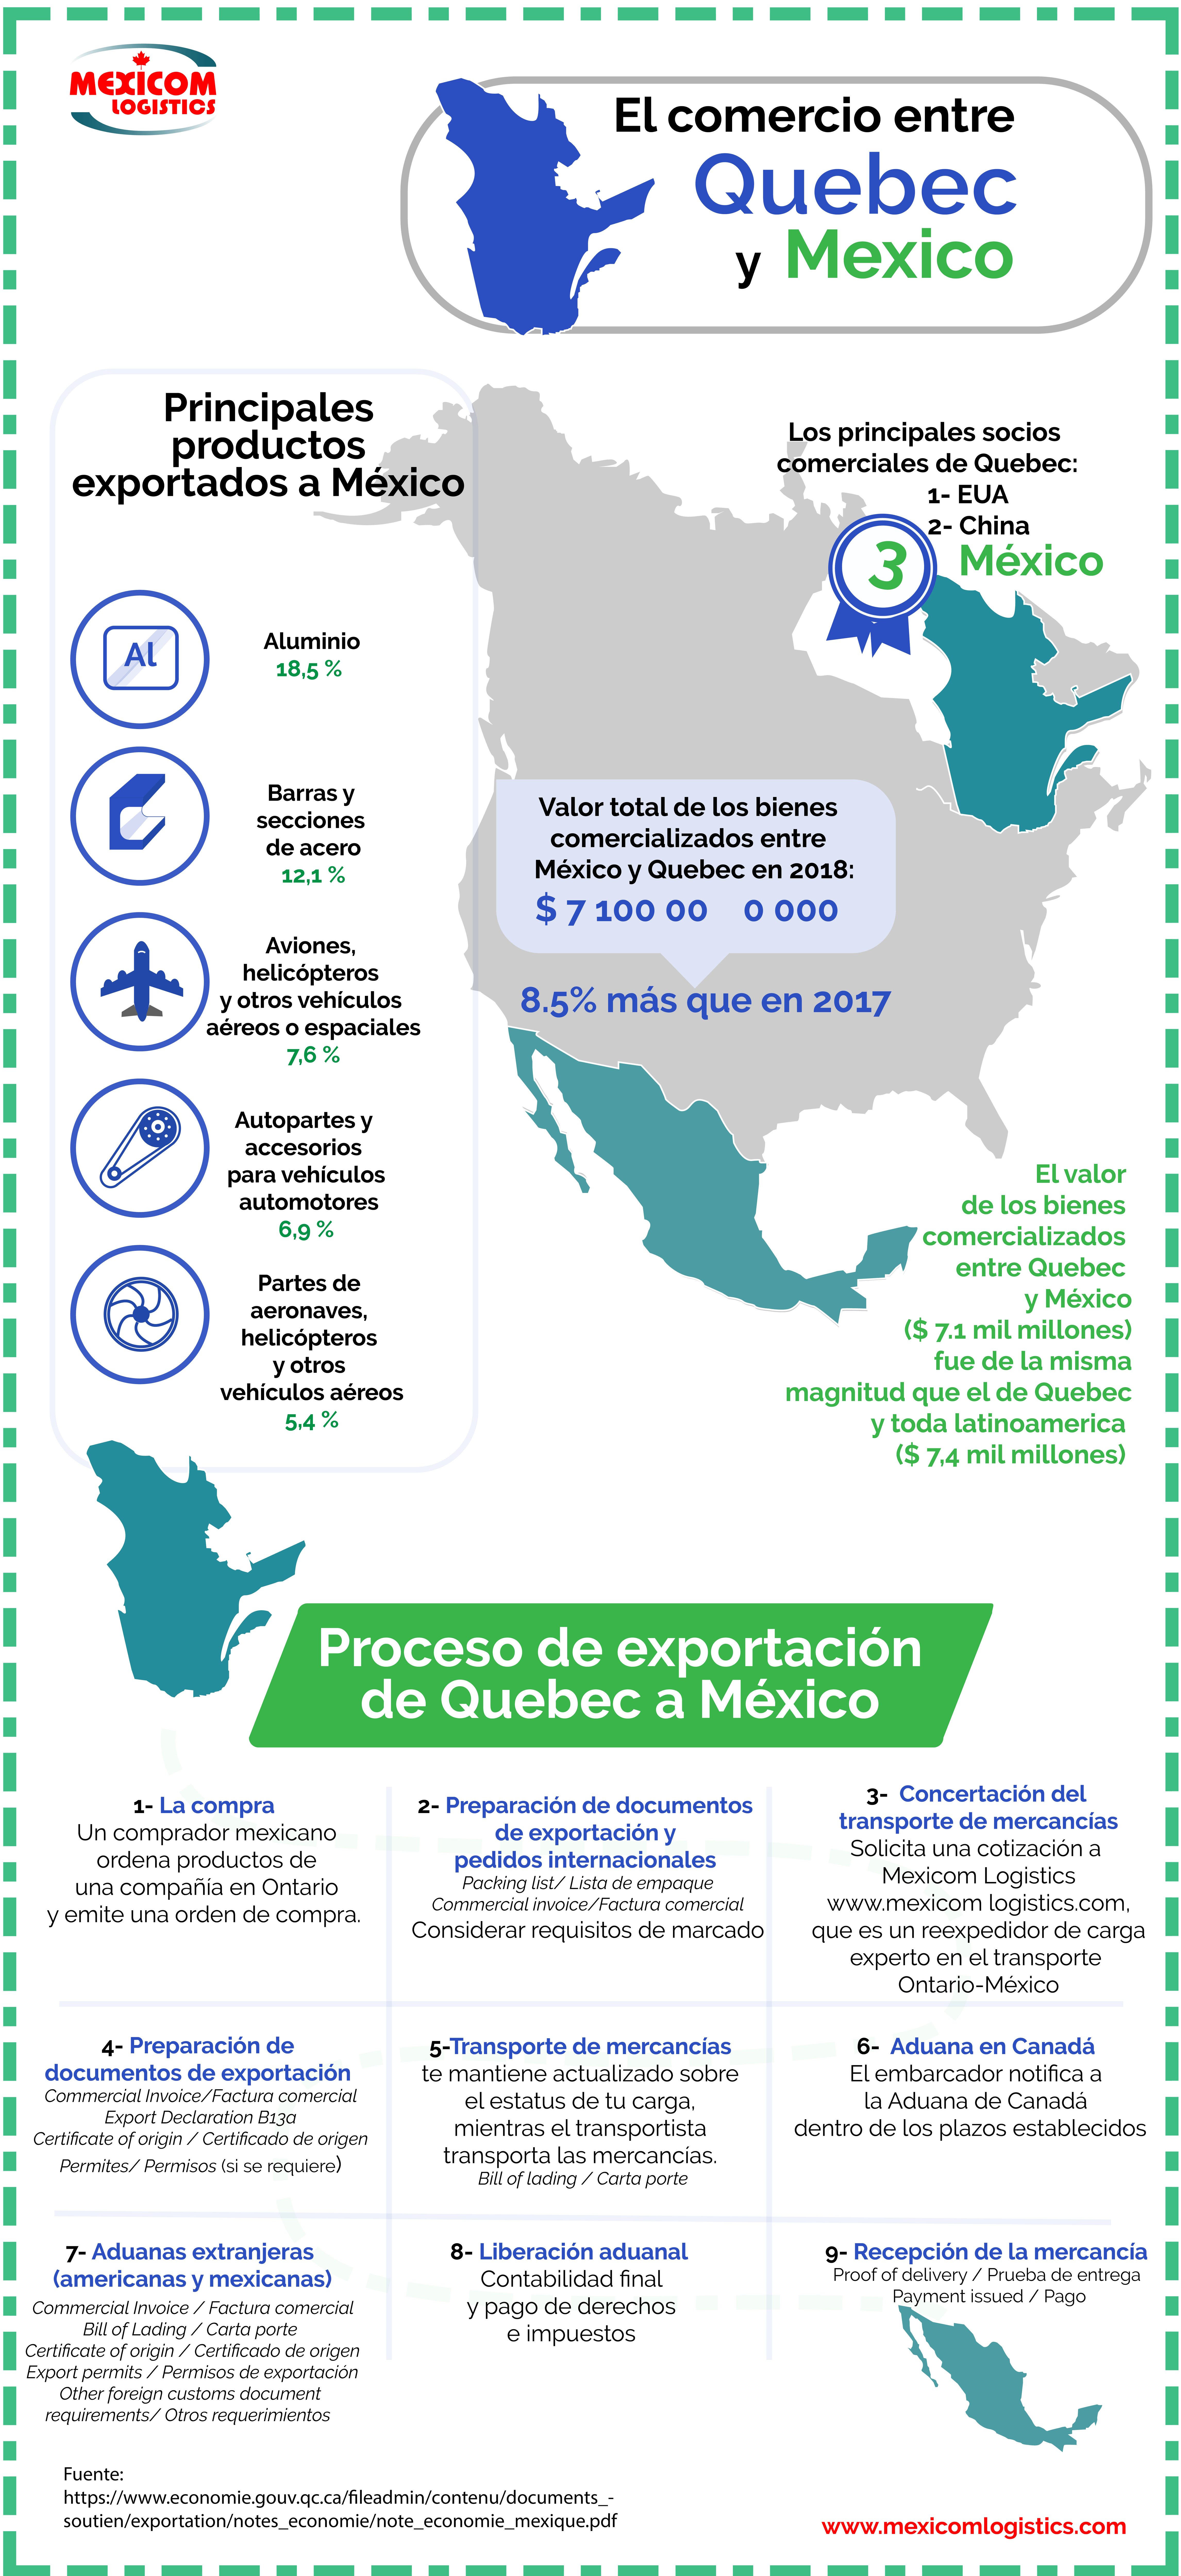 Proceso de exportacion y trasnporte de mercancias de Quebec a Mexico 